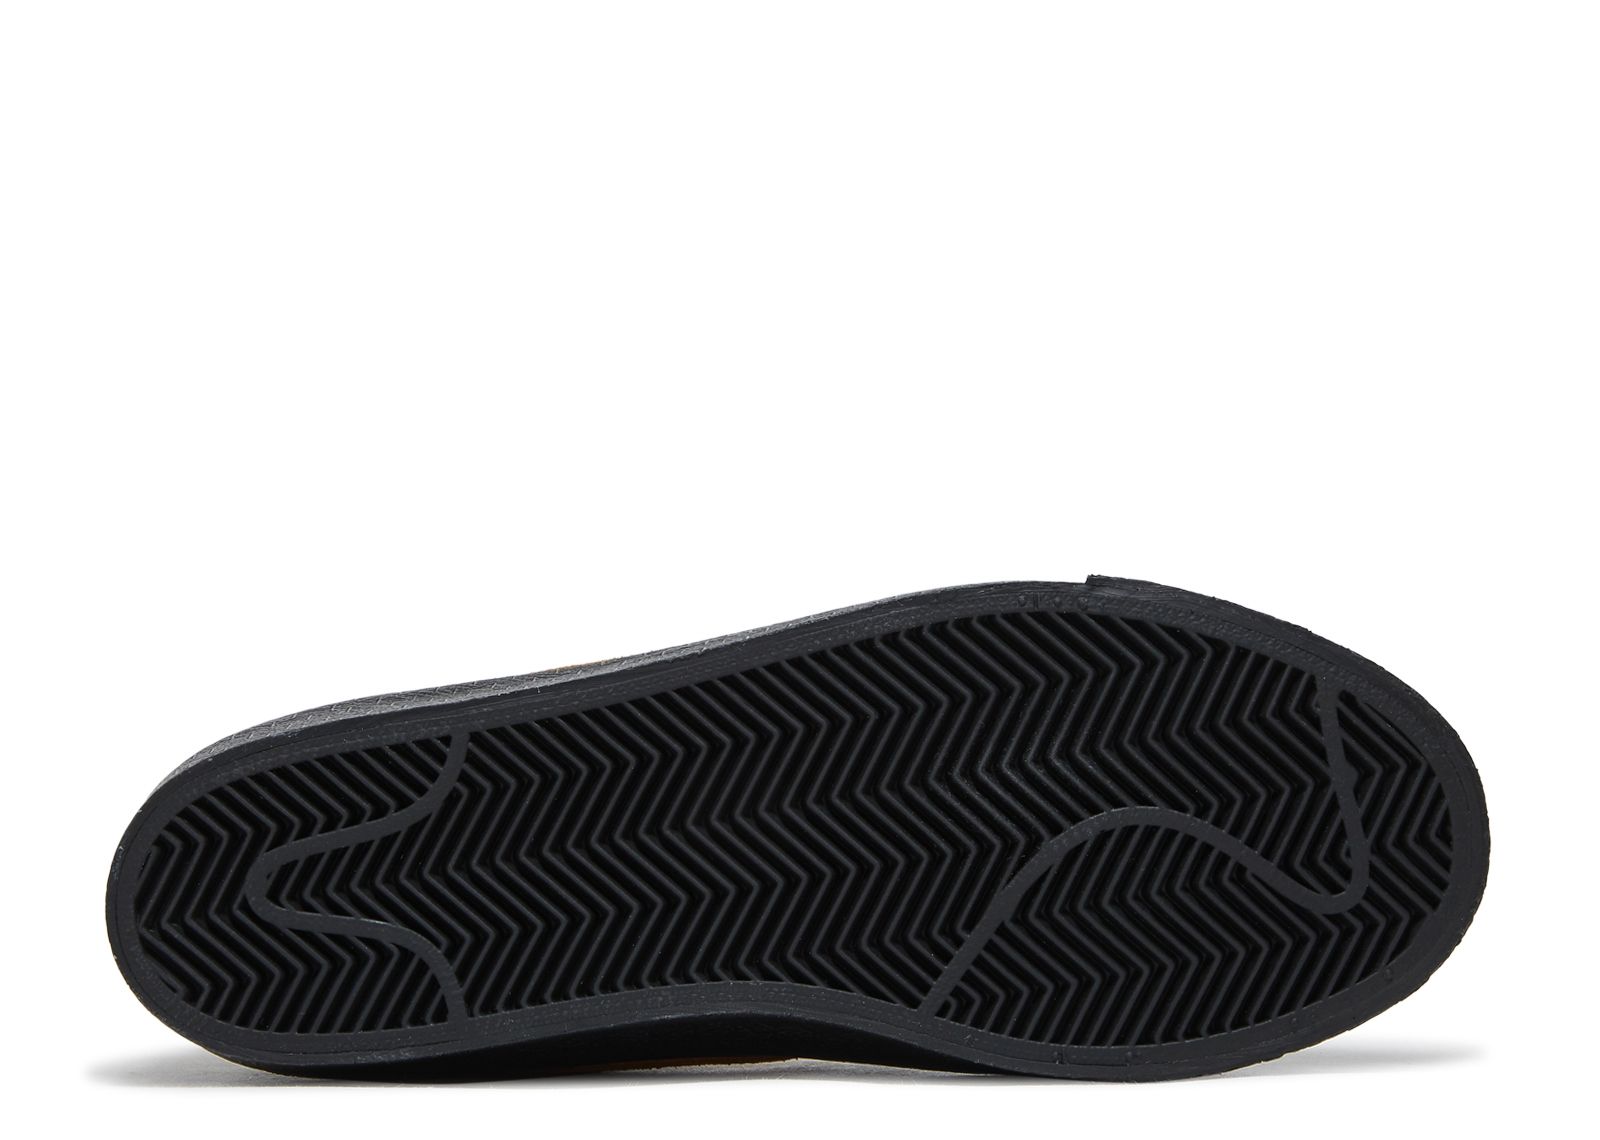 Supreme X Zoom Blazer Mid QS SB 'Black Snakeskin' - Nike - DV5078 001 -  black/black | Flight Club